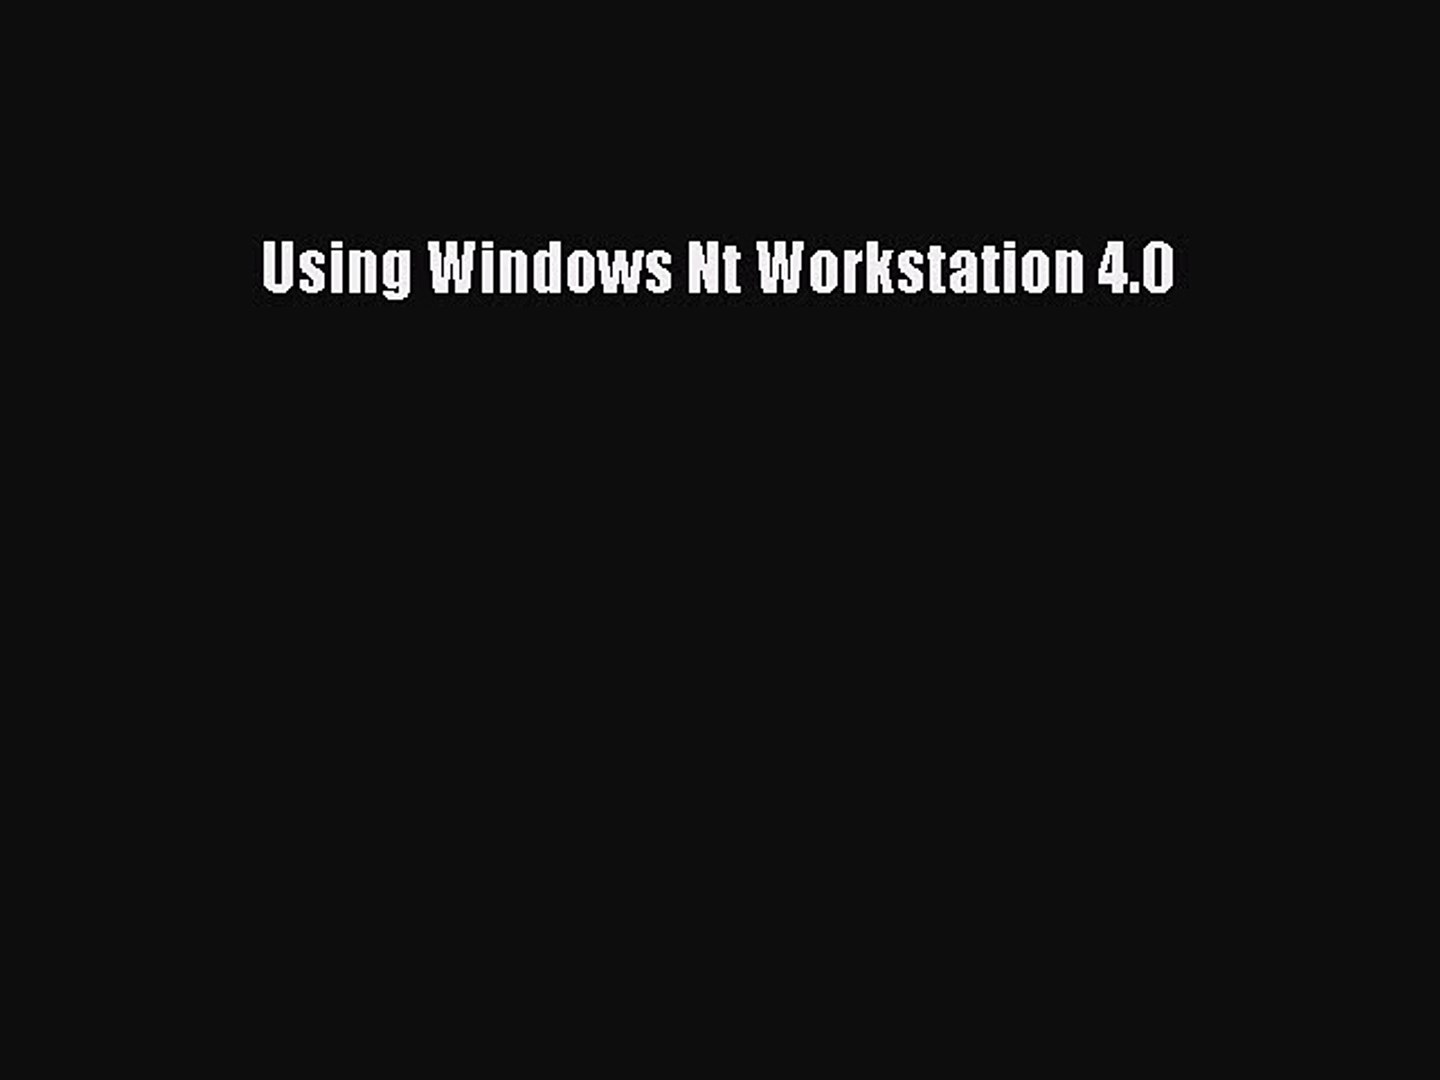 windows nt 4.0 iso file